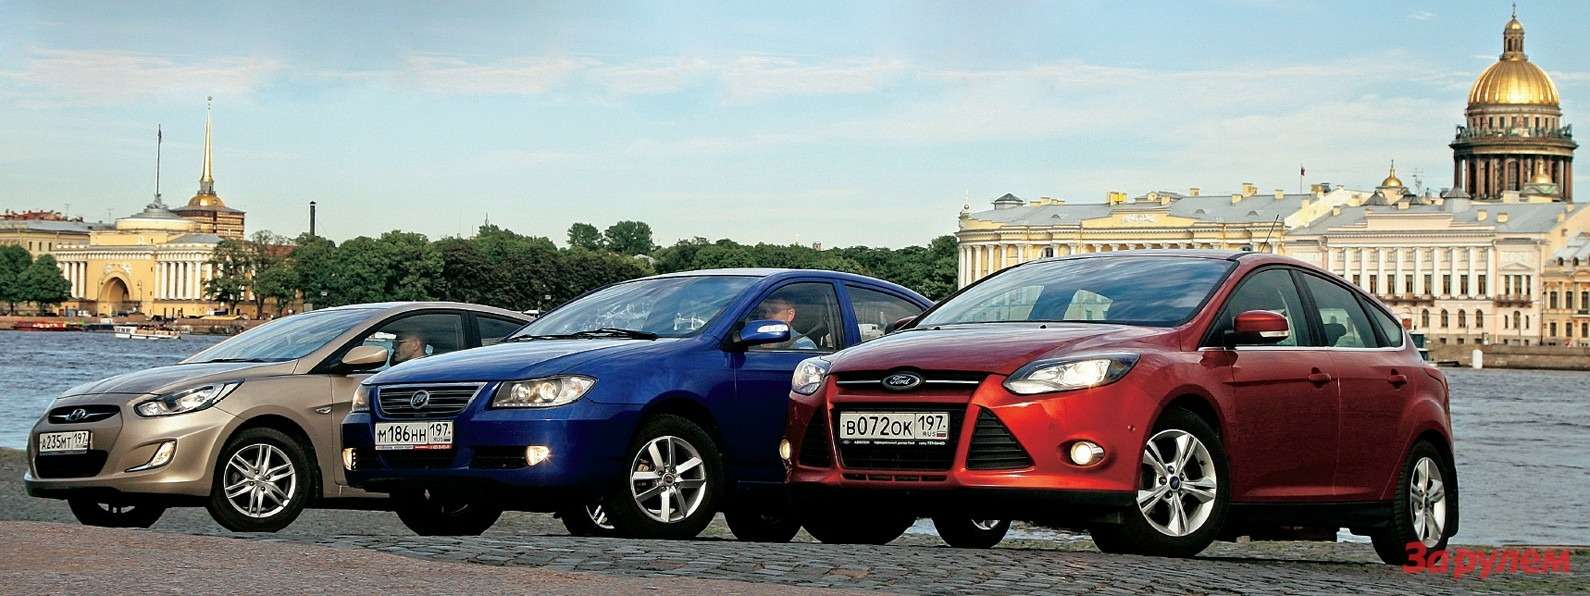 Ford Focus, Hyundai Solaris, Lifan Solano